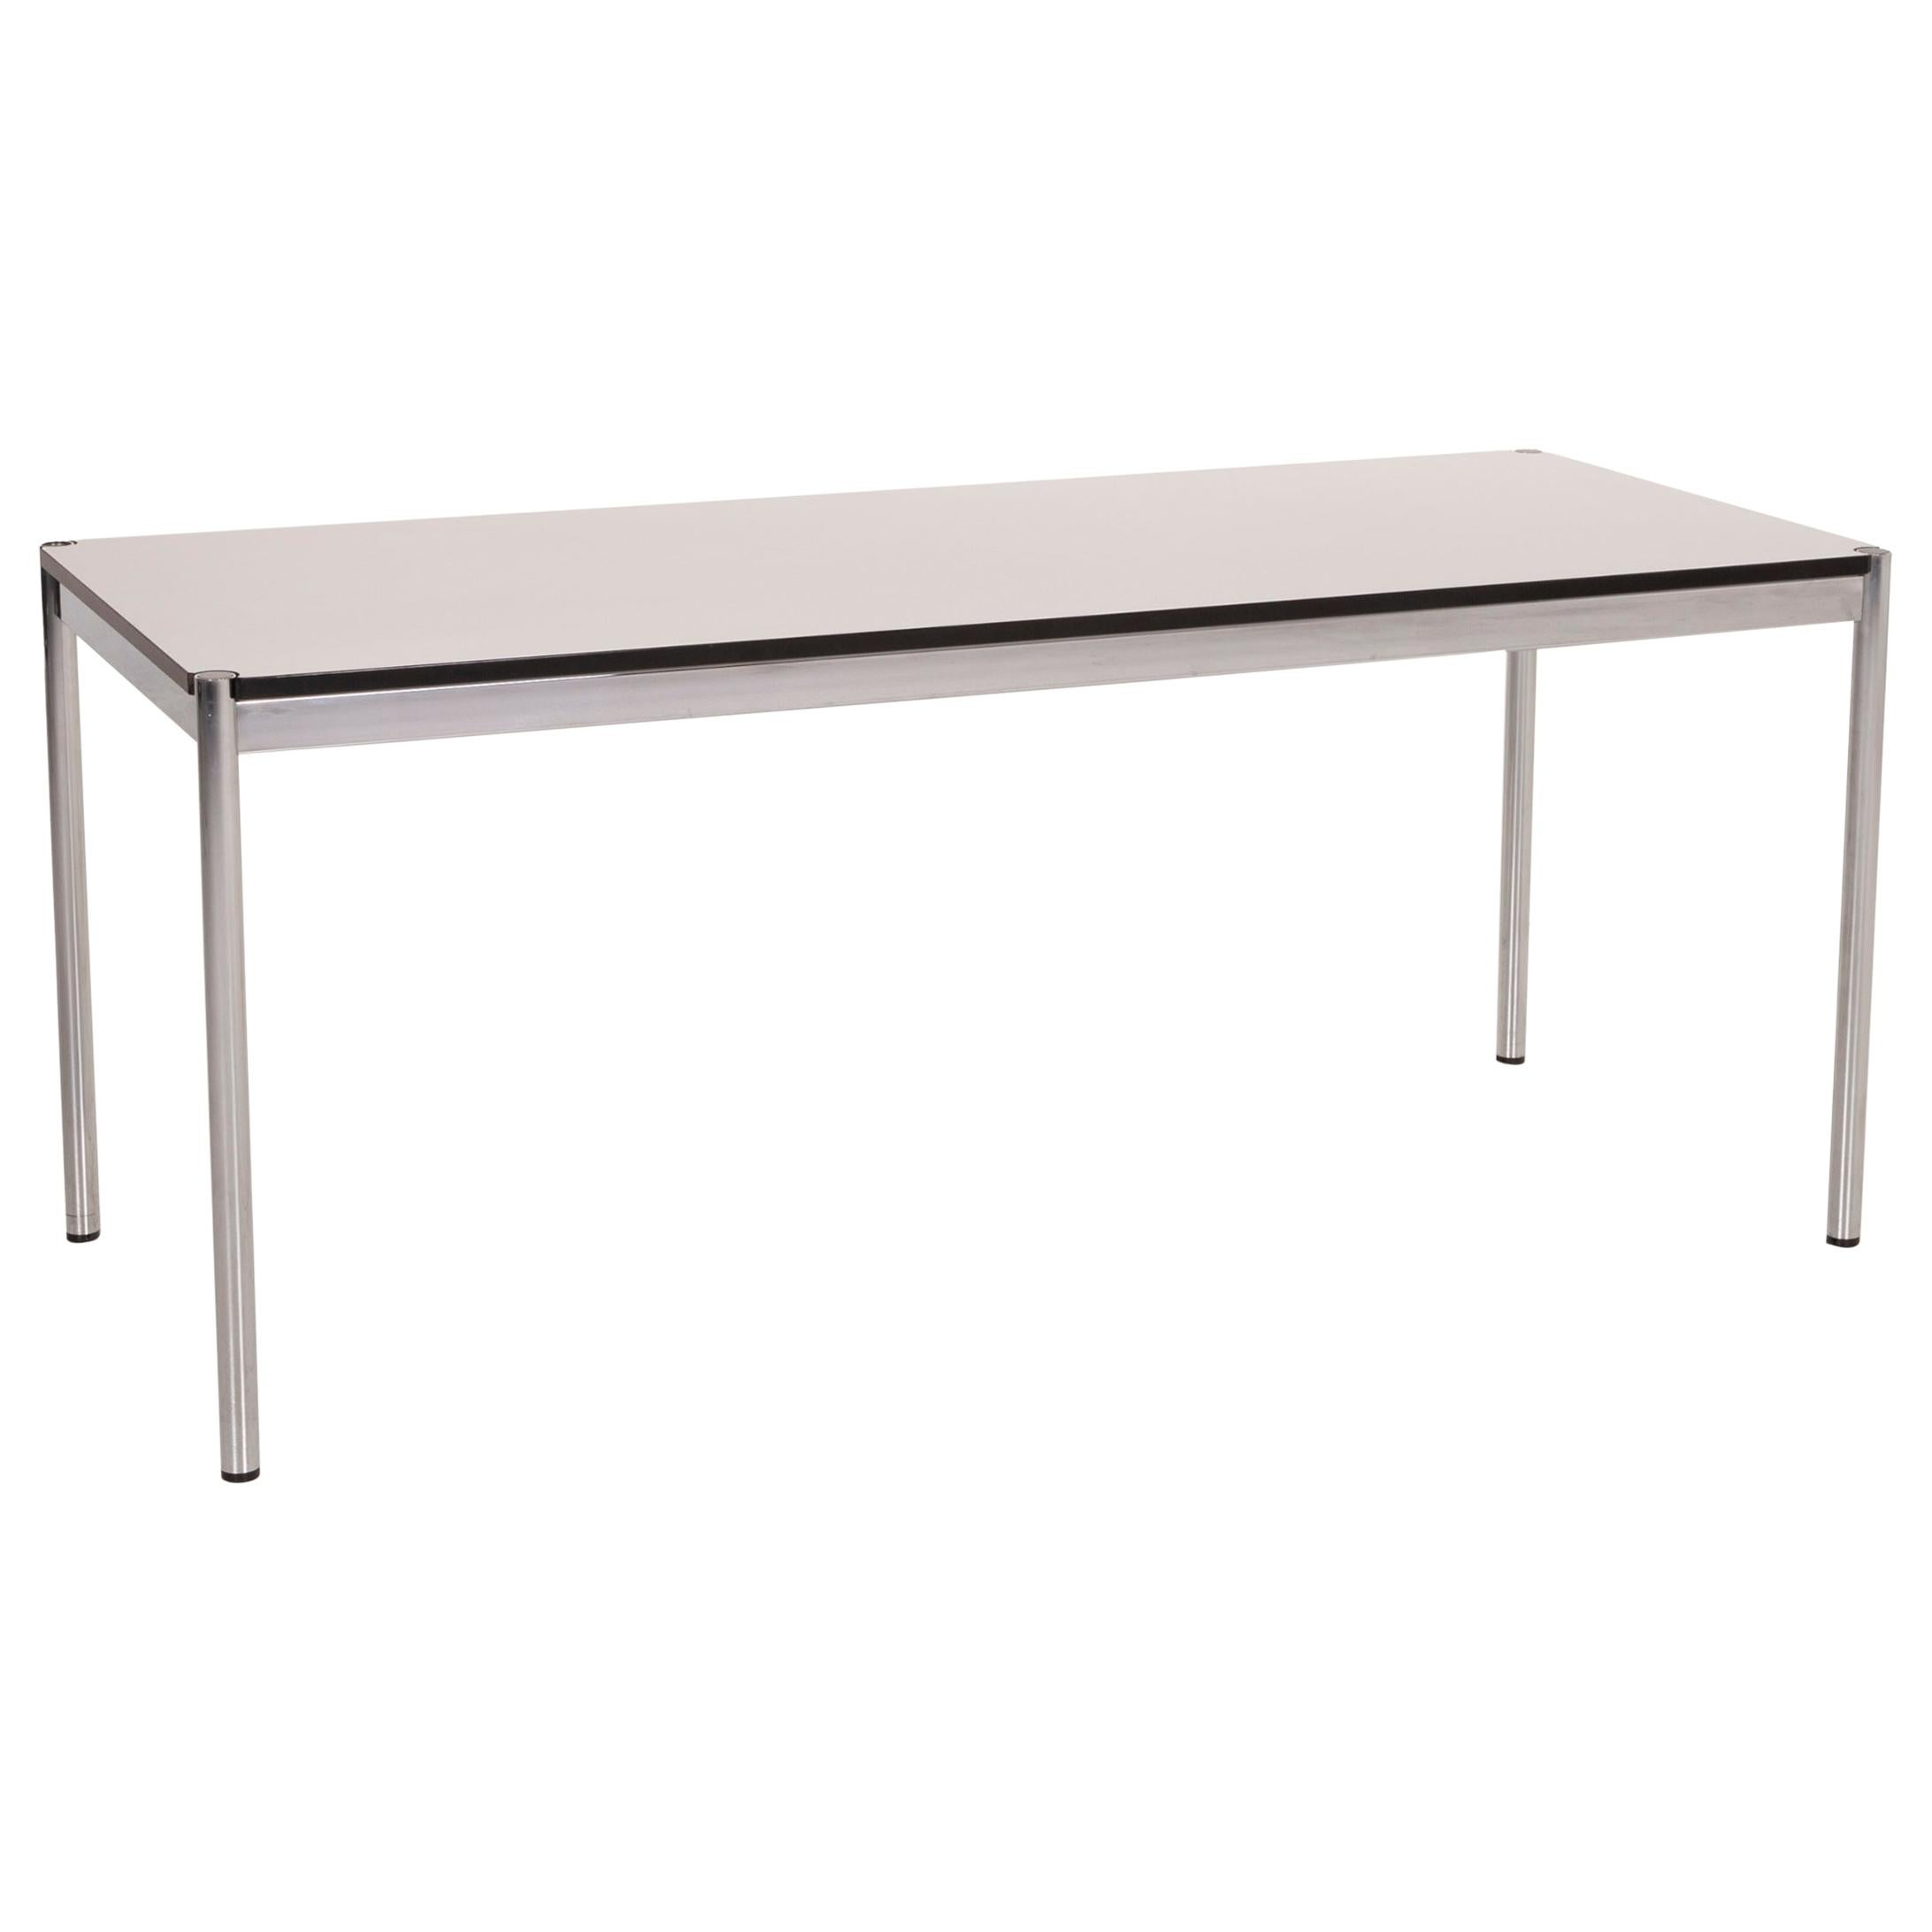 USM Haller Metal Table White Desk Chrome For Sale